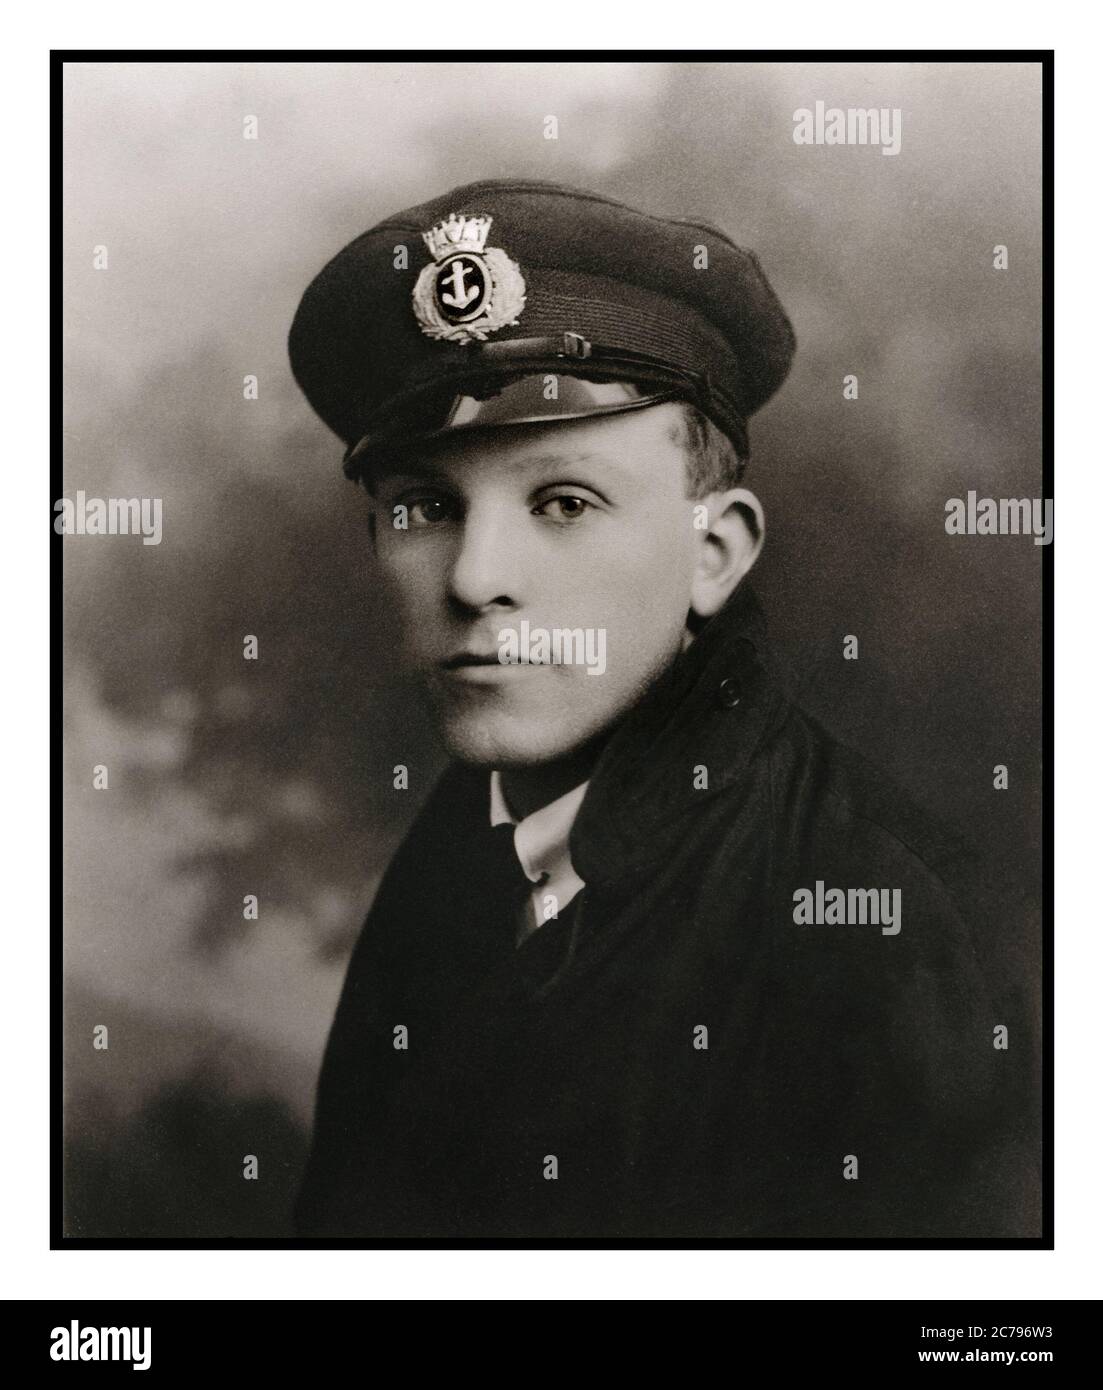 Merchant Navy Seaman in Uniform Archive studio portrait of 18-20 years British merchant seaman 1920's in uniform with cap badge displaying the crest of the UK Merchant Navy service Stock Photo